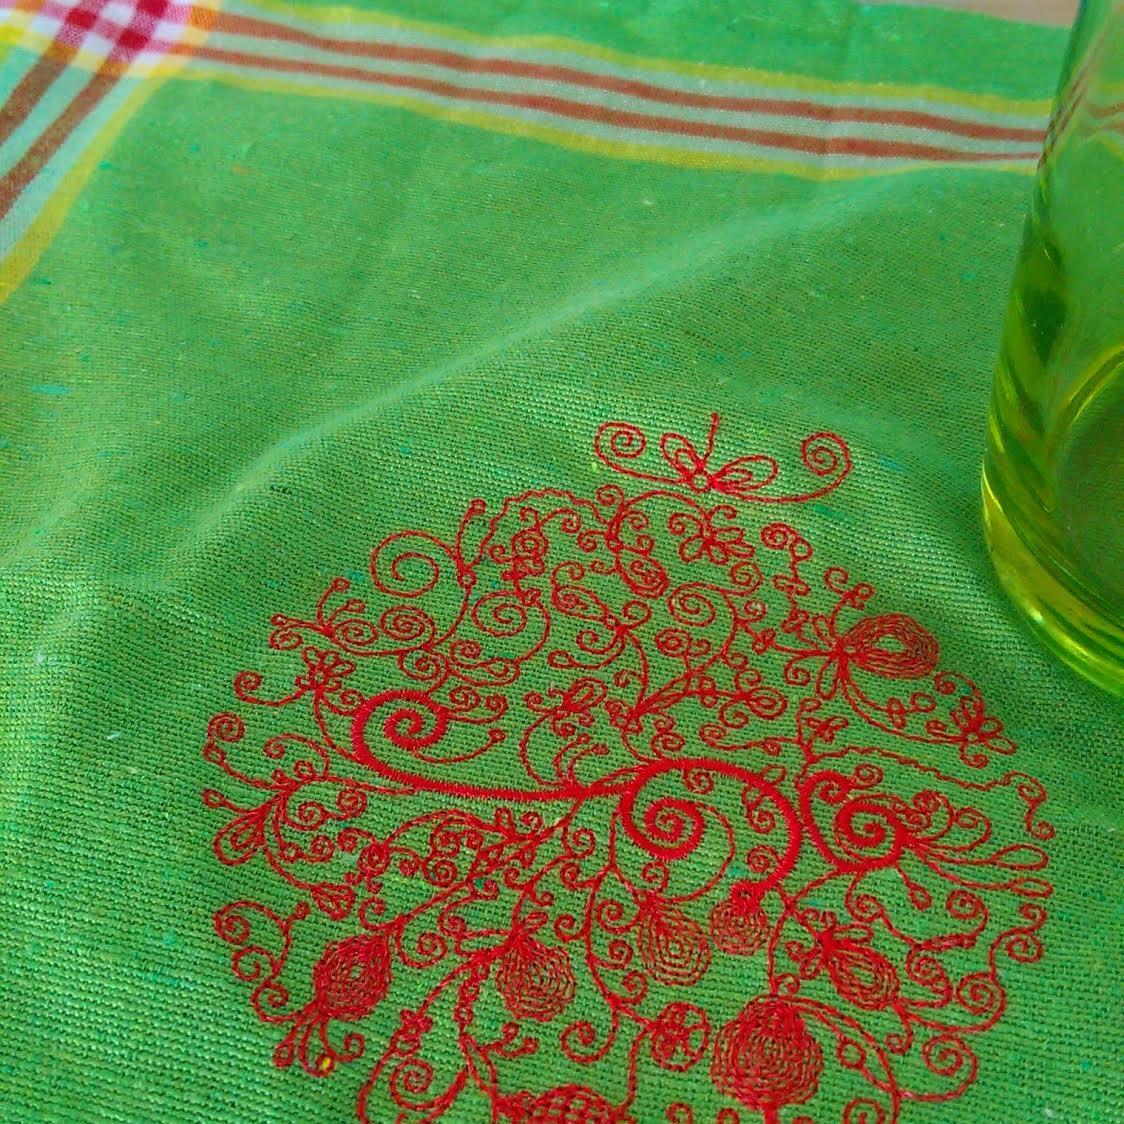 Сhristmas ball embroidered napkin